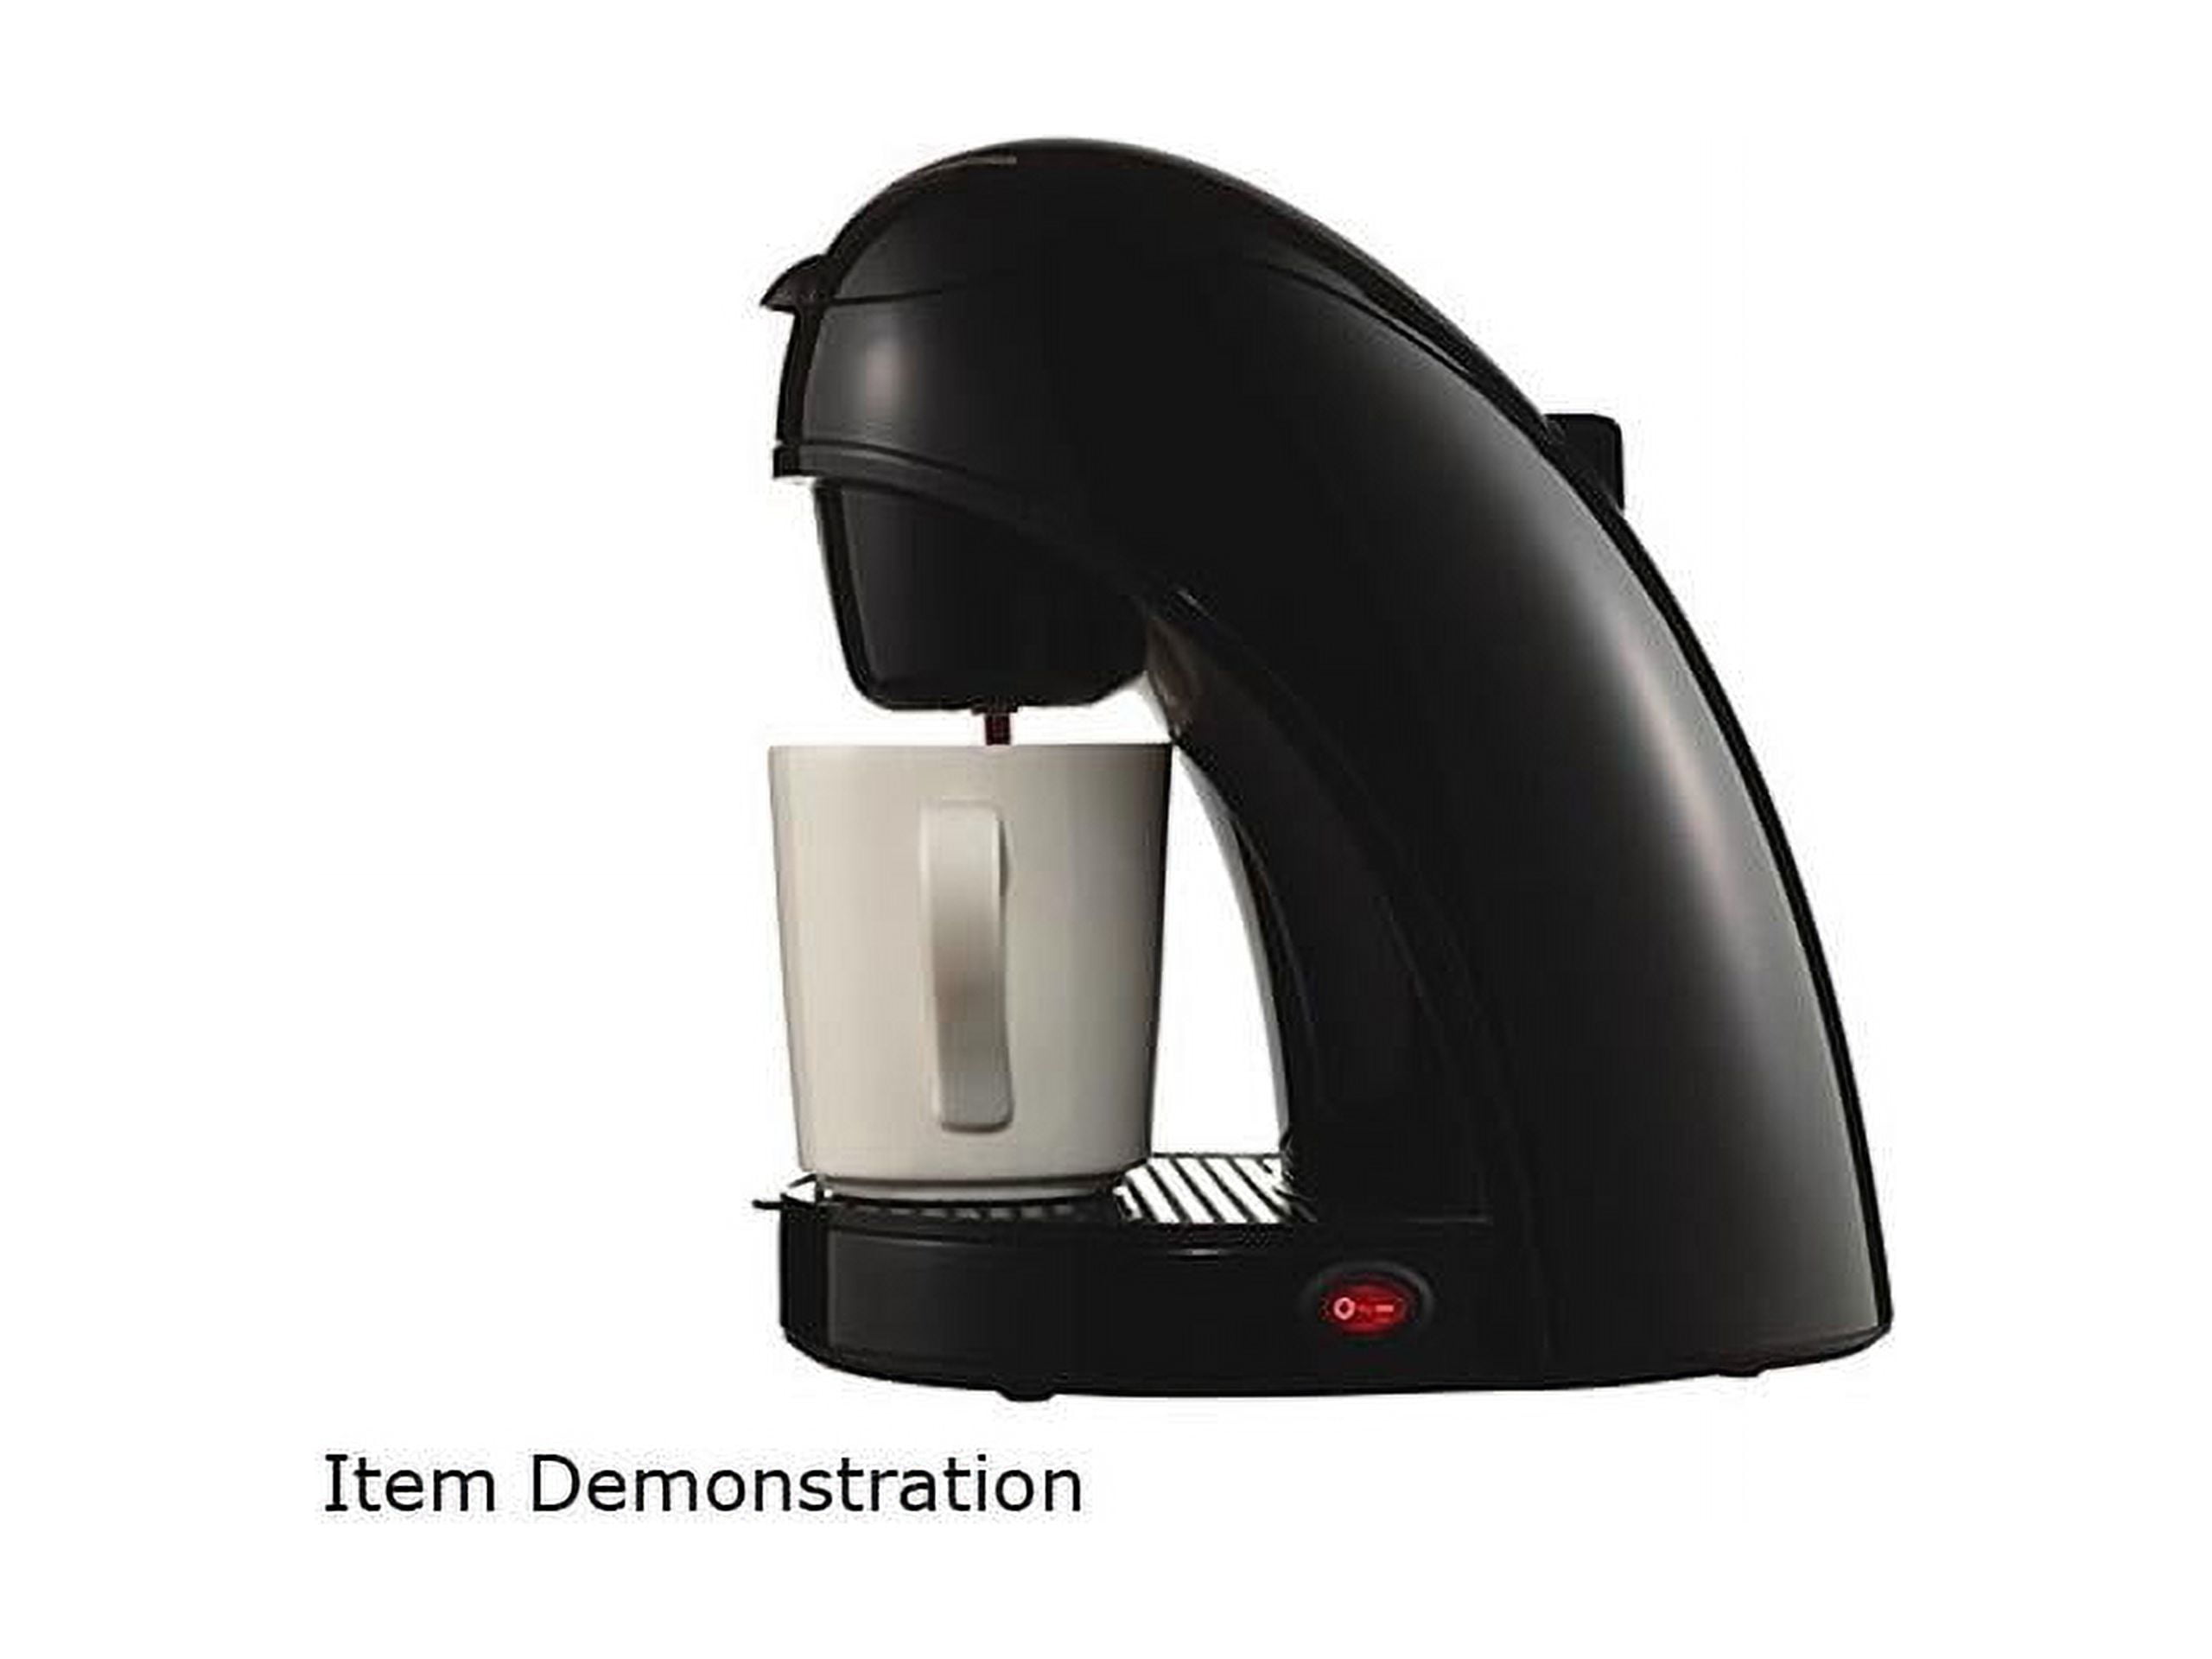 Brentwood Single Serve Coffee Maker with Mug, Black TS-112B 